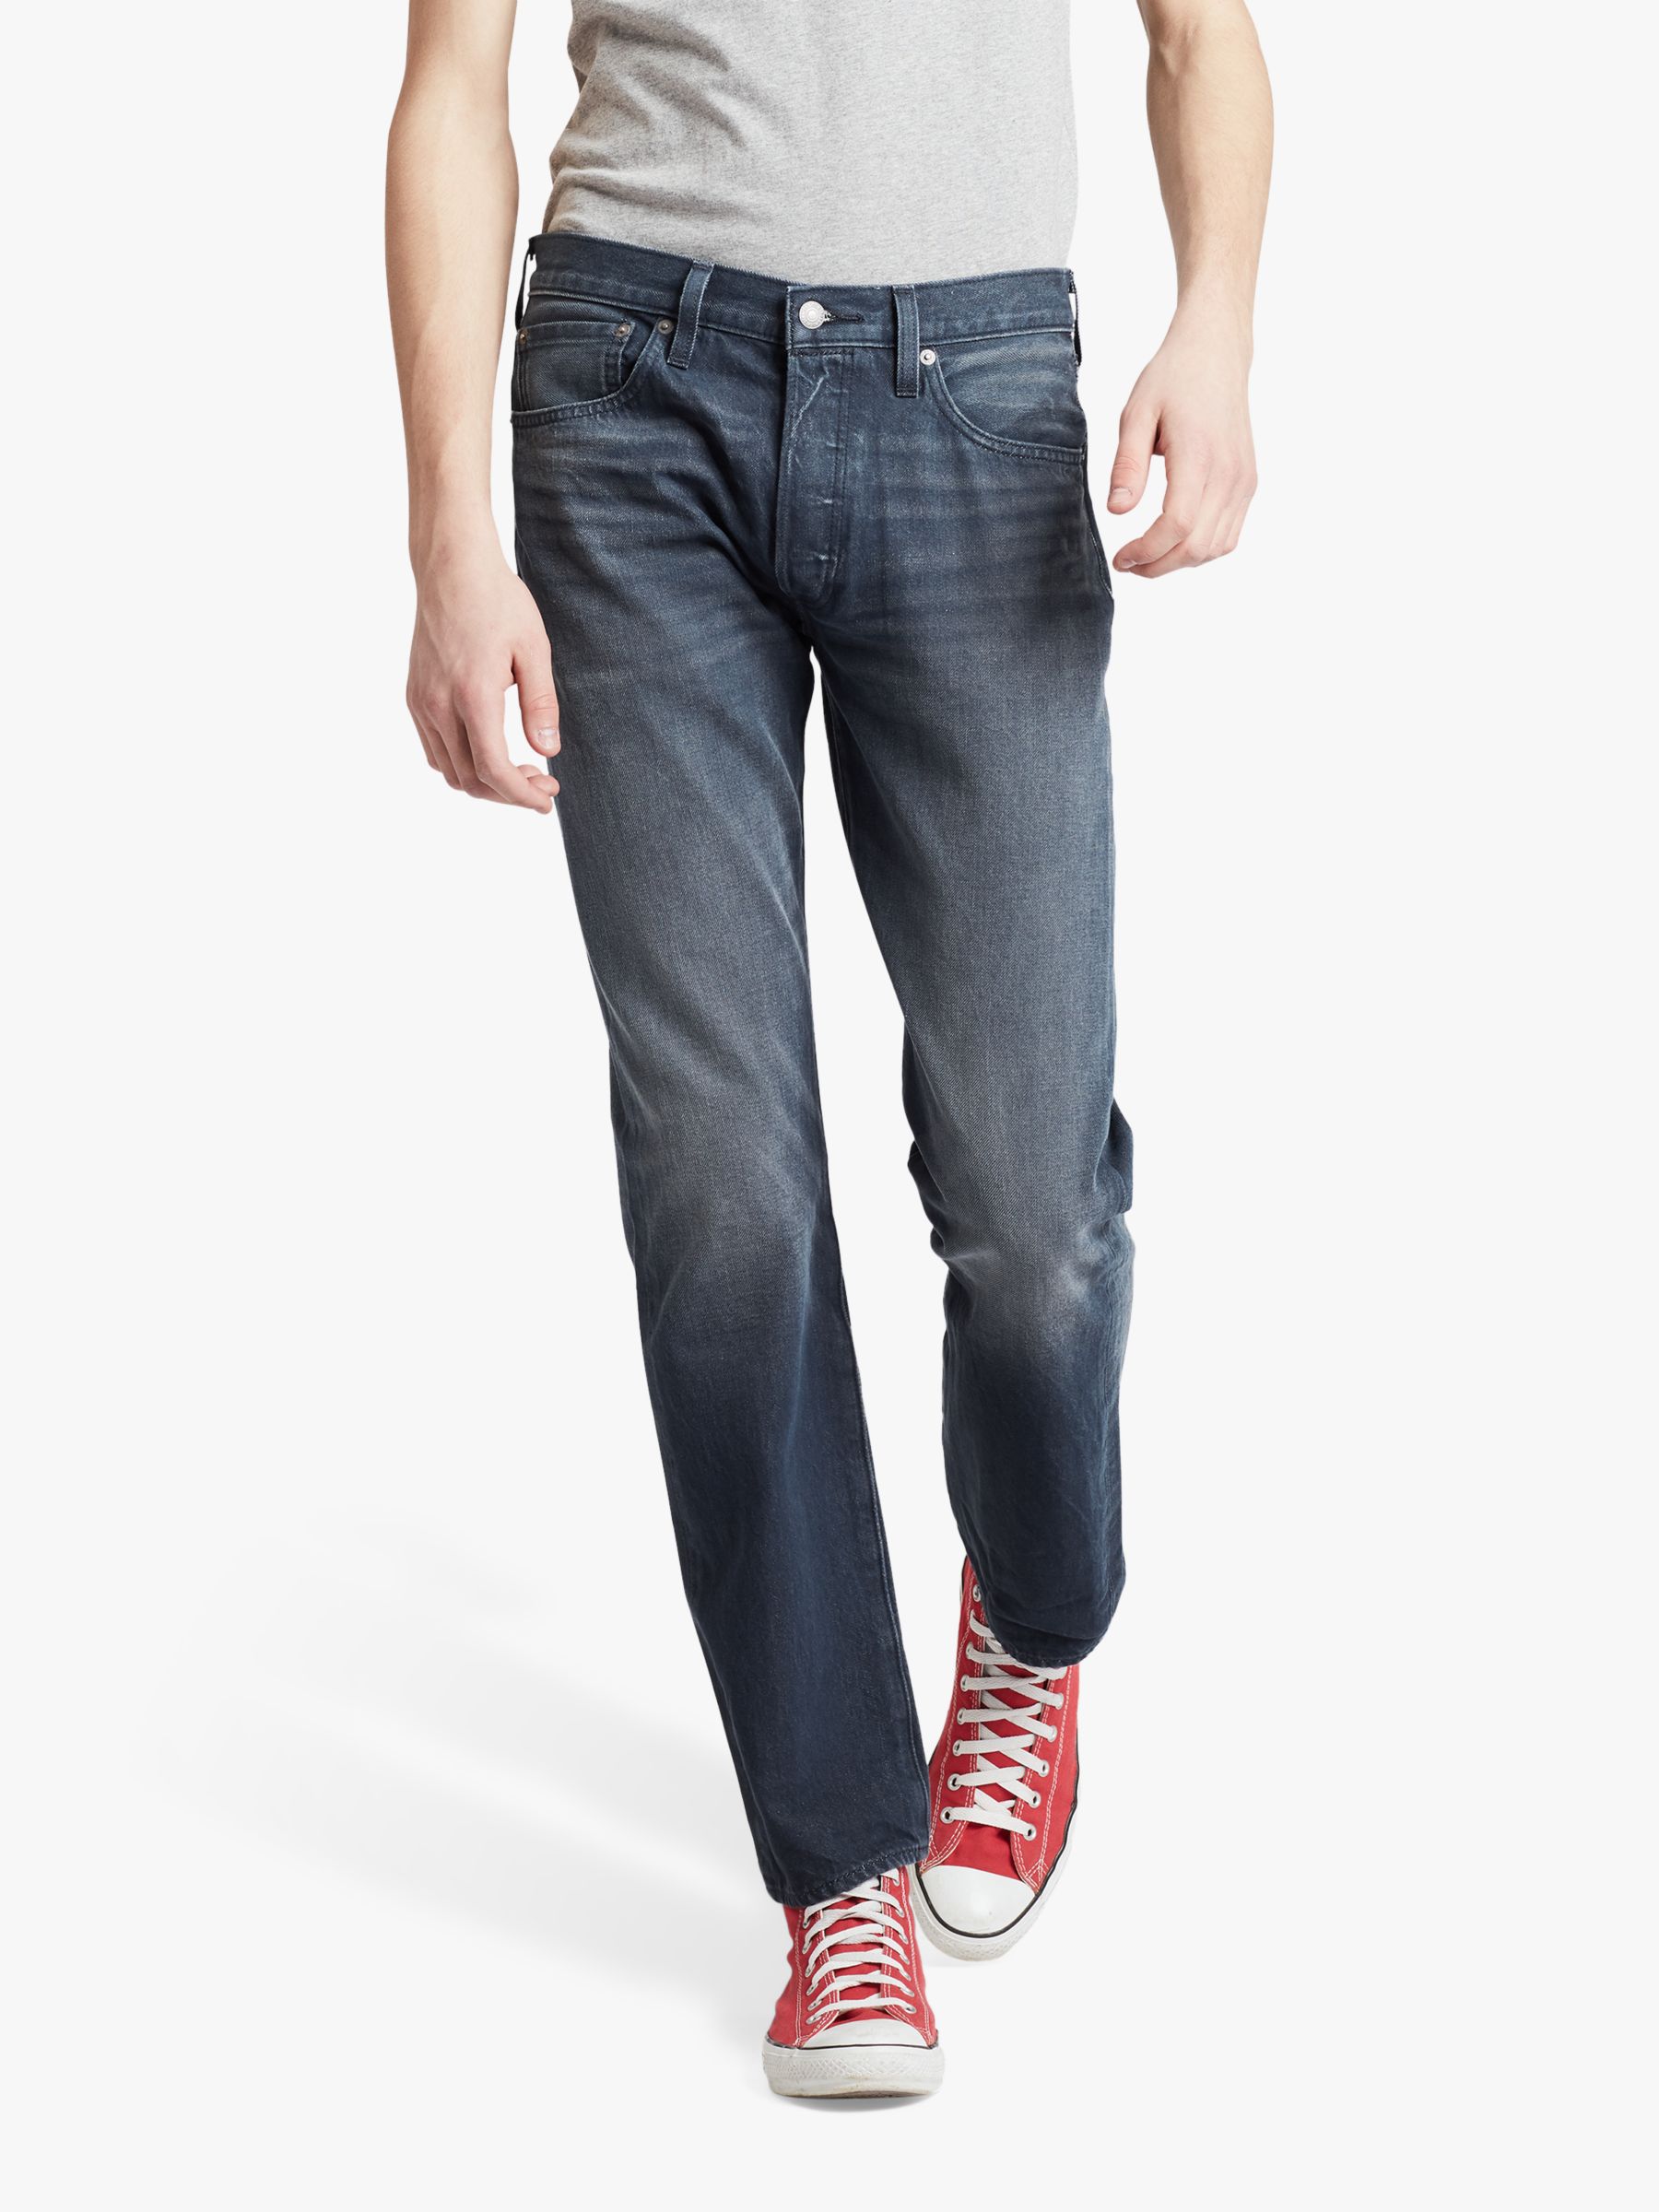 Levi's 501 Original Slim Fit Jeans 